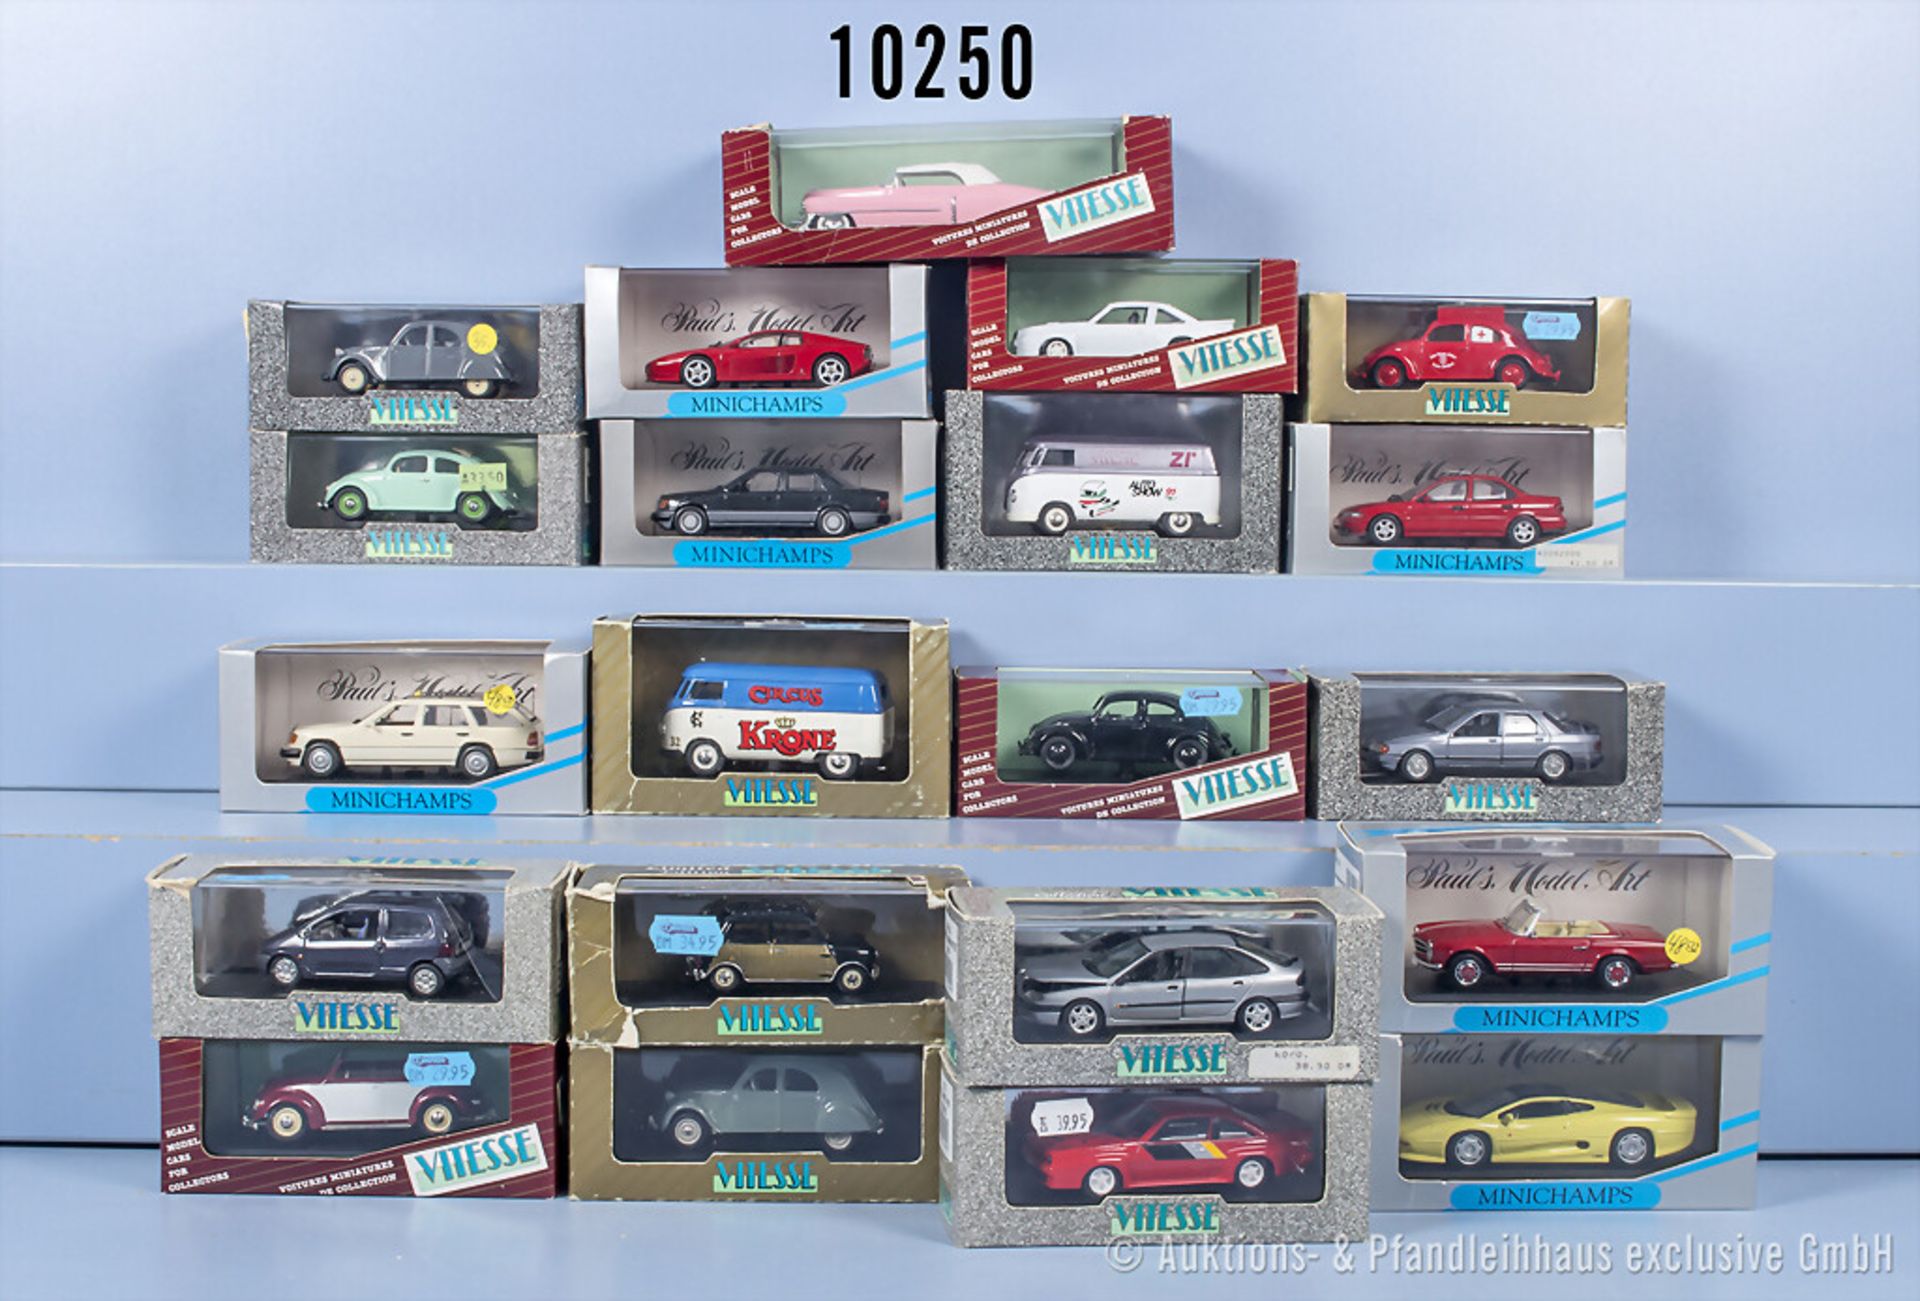 21 Modellfahrzeuge, Minichamps und Vitesse, dabei Jaguar XJ 220, Ferrari 512 TR, ...